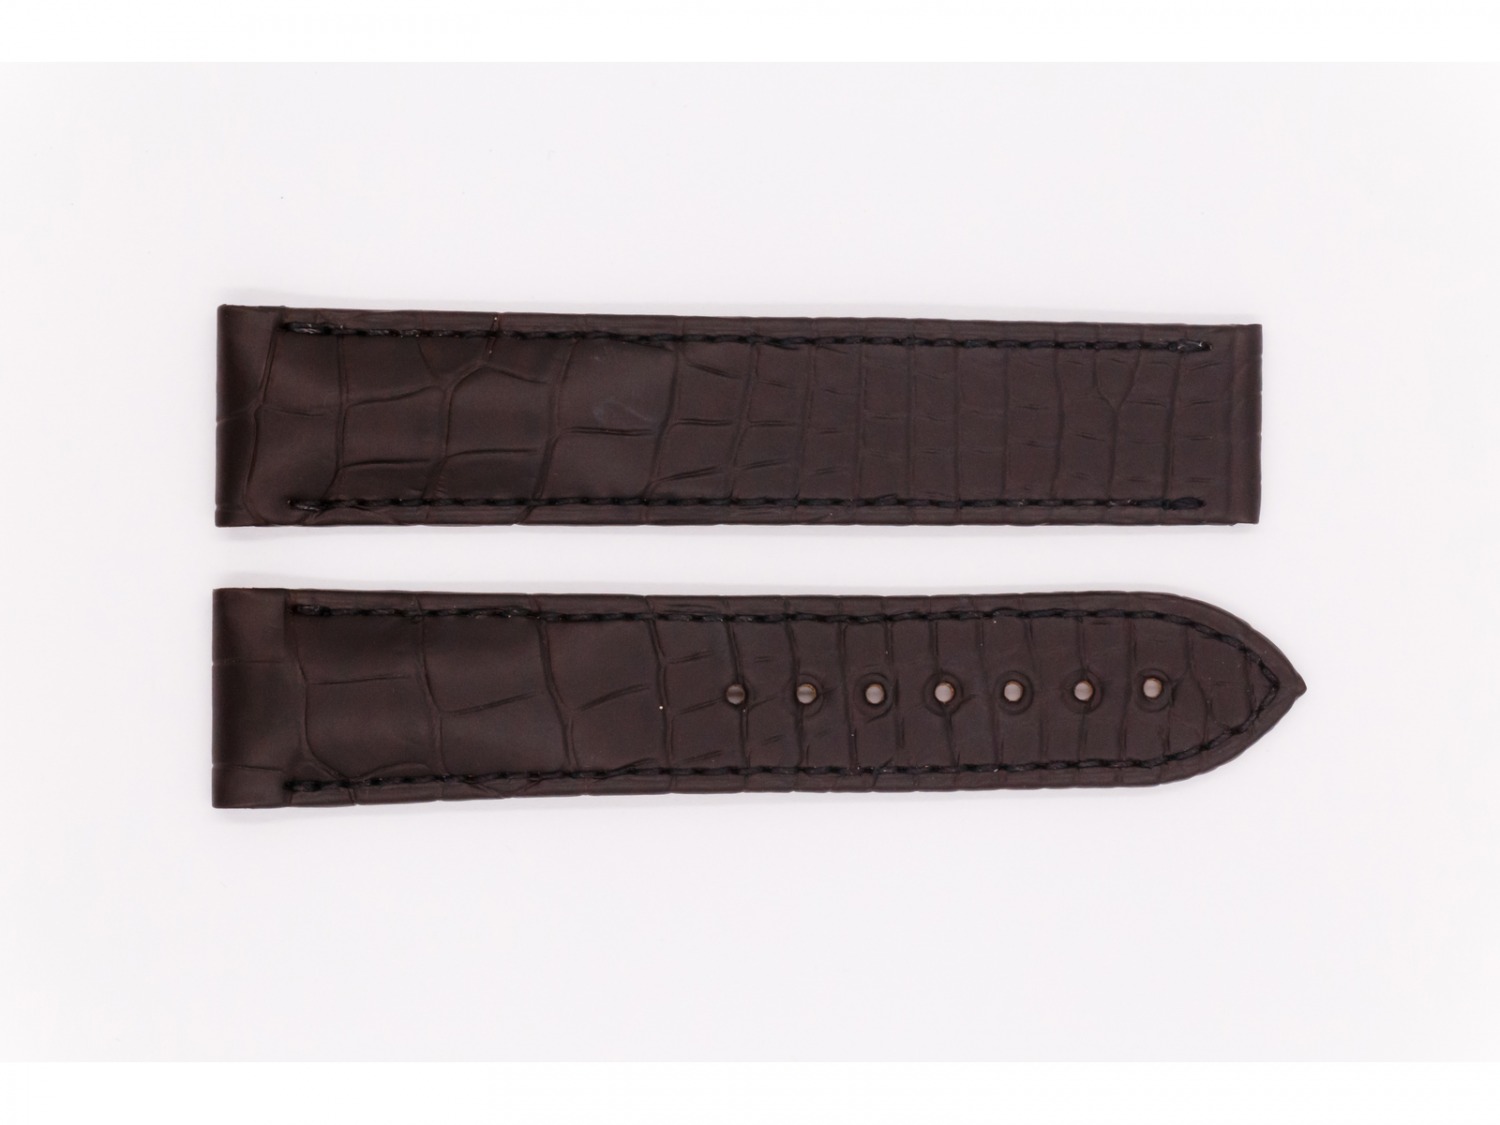 Leather Omega Strap, dark brown